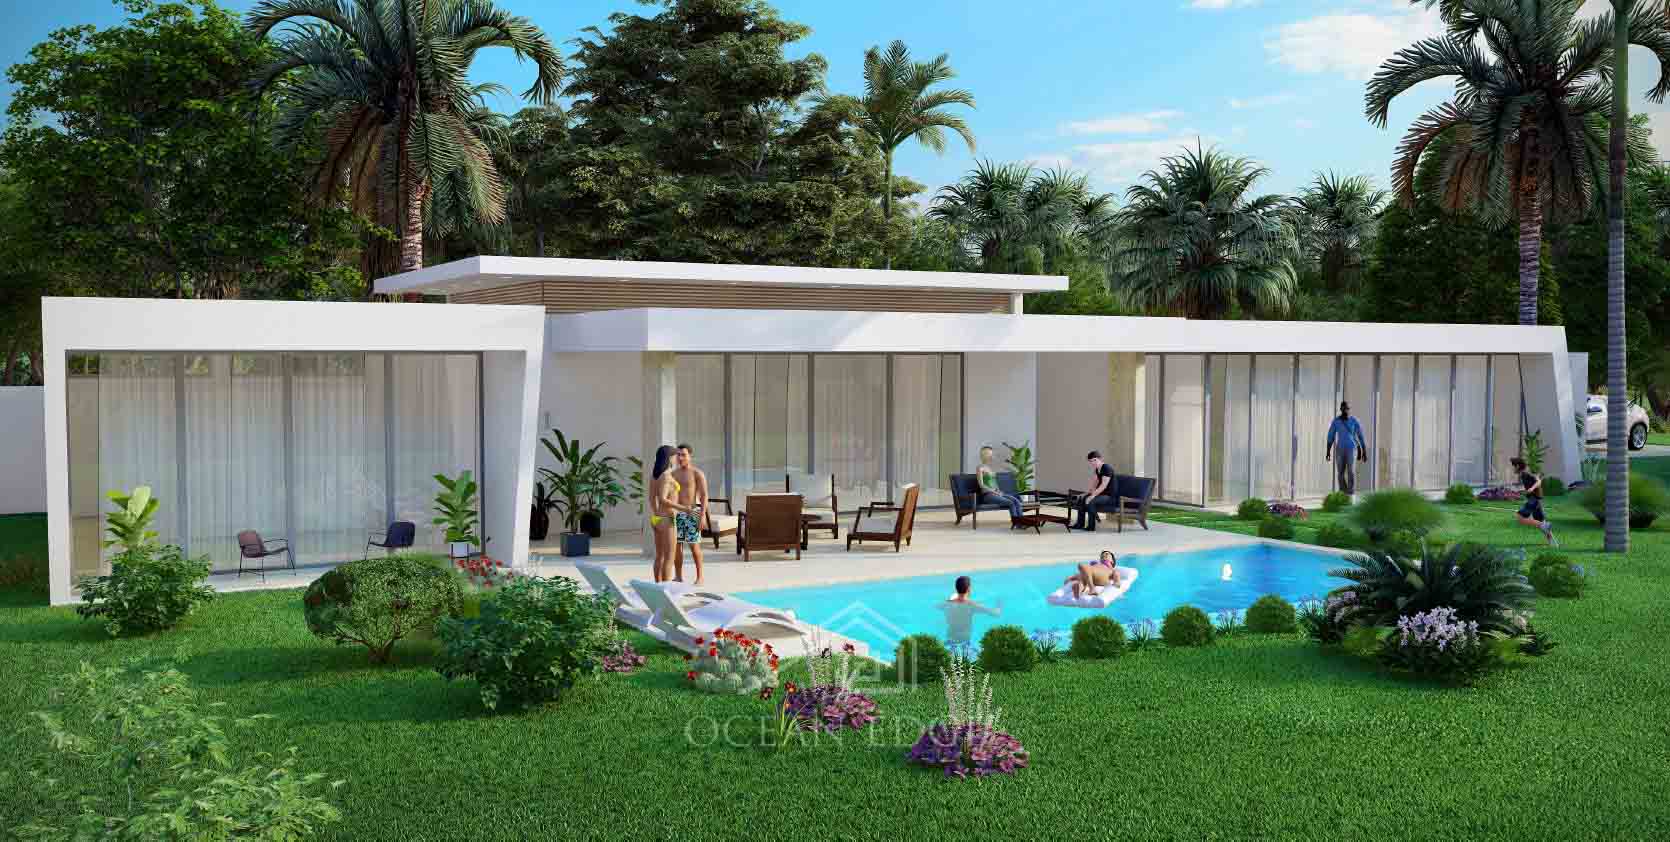 Luxury 5-bed villa near tourism beach - Las-terrenas-real-estate-dominican-republic (3)